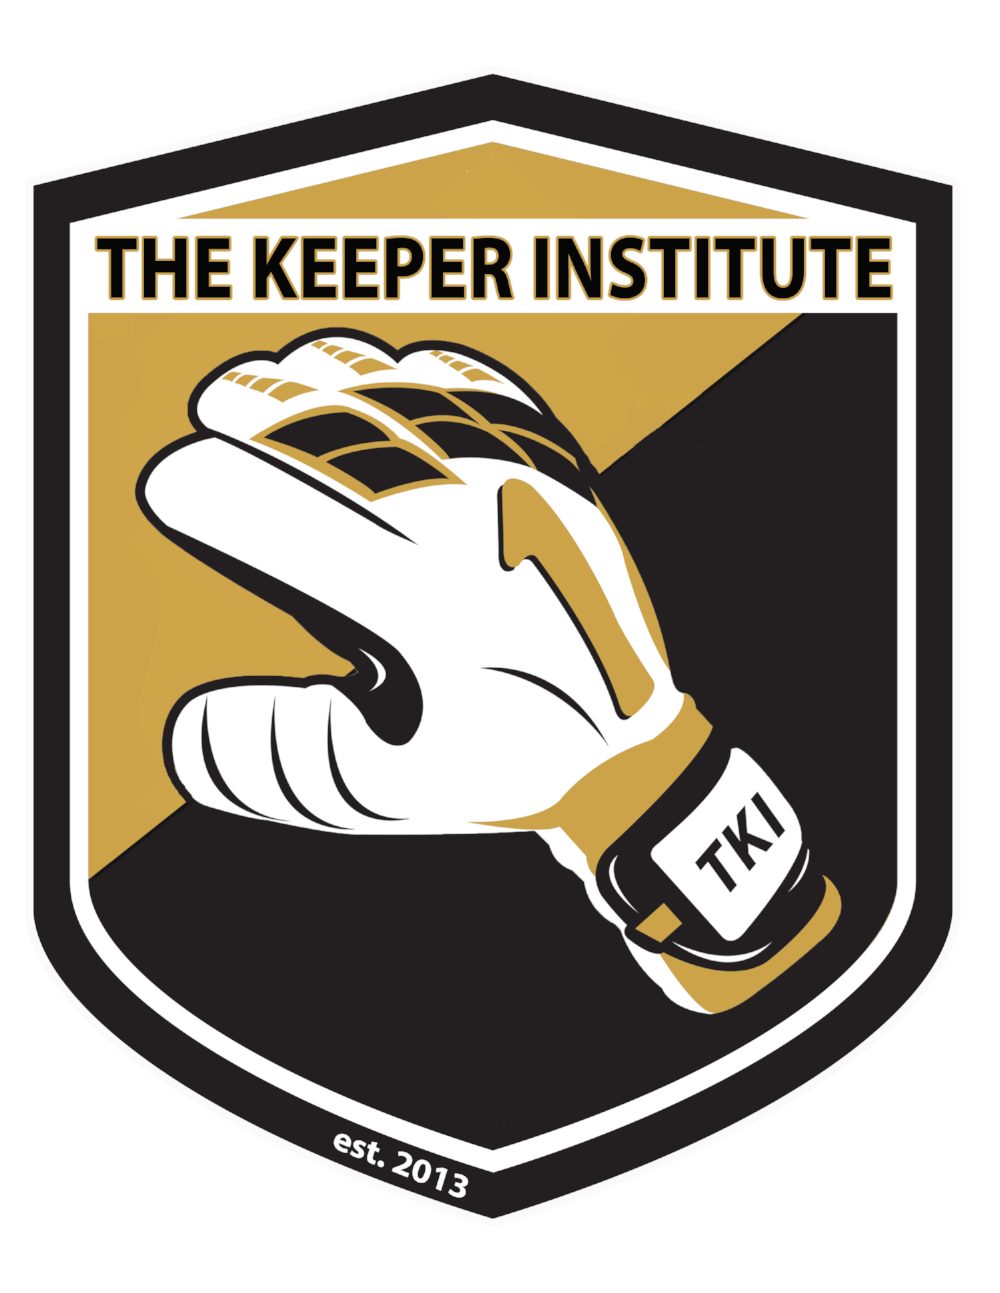 The Keeper Institute